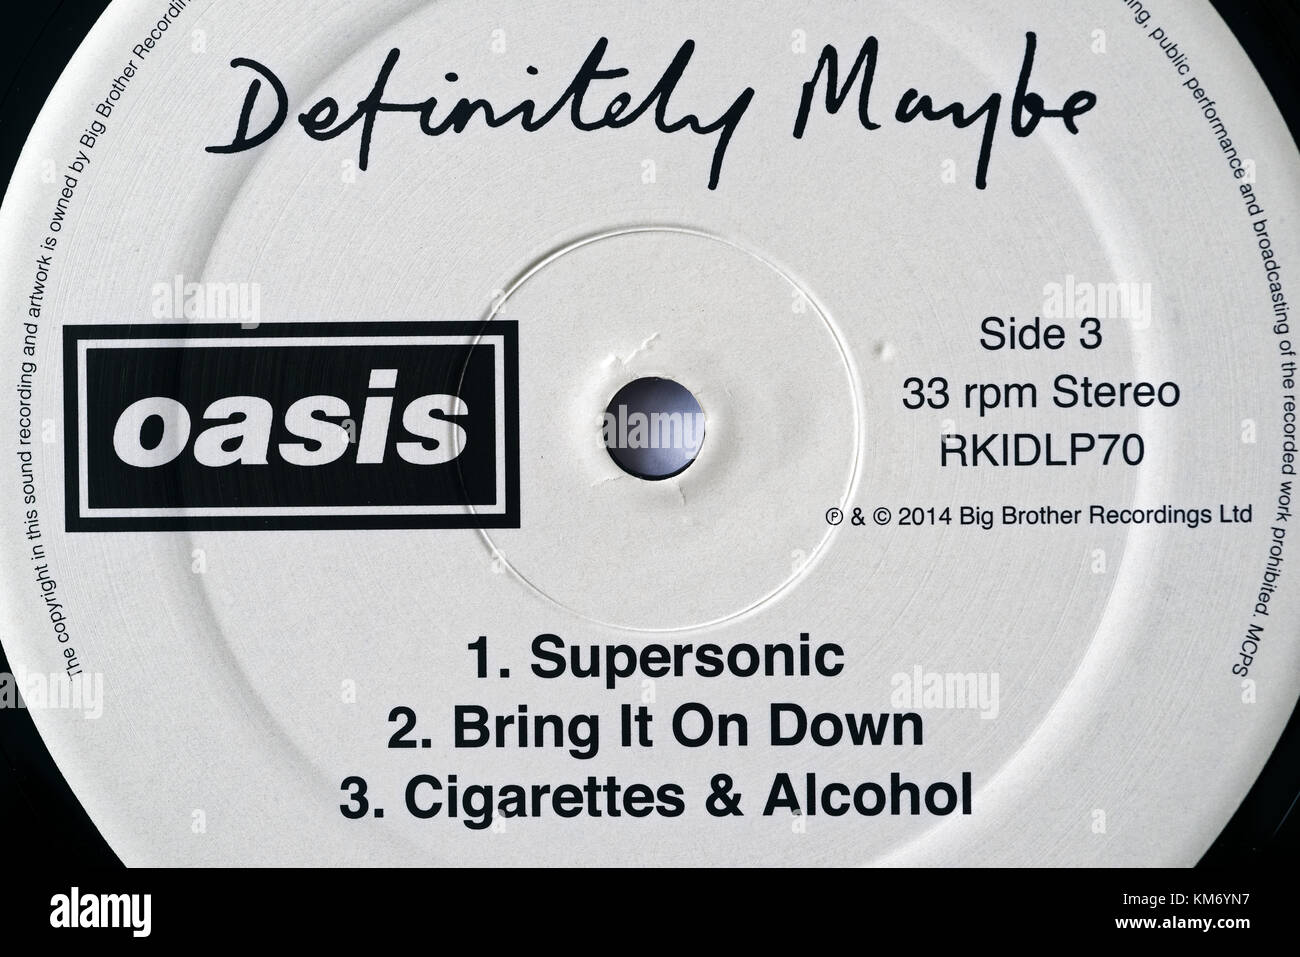 Álbum de Oasis Definitely Maybe Detalle de etiqueta Foto de stock